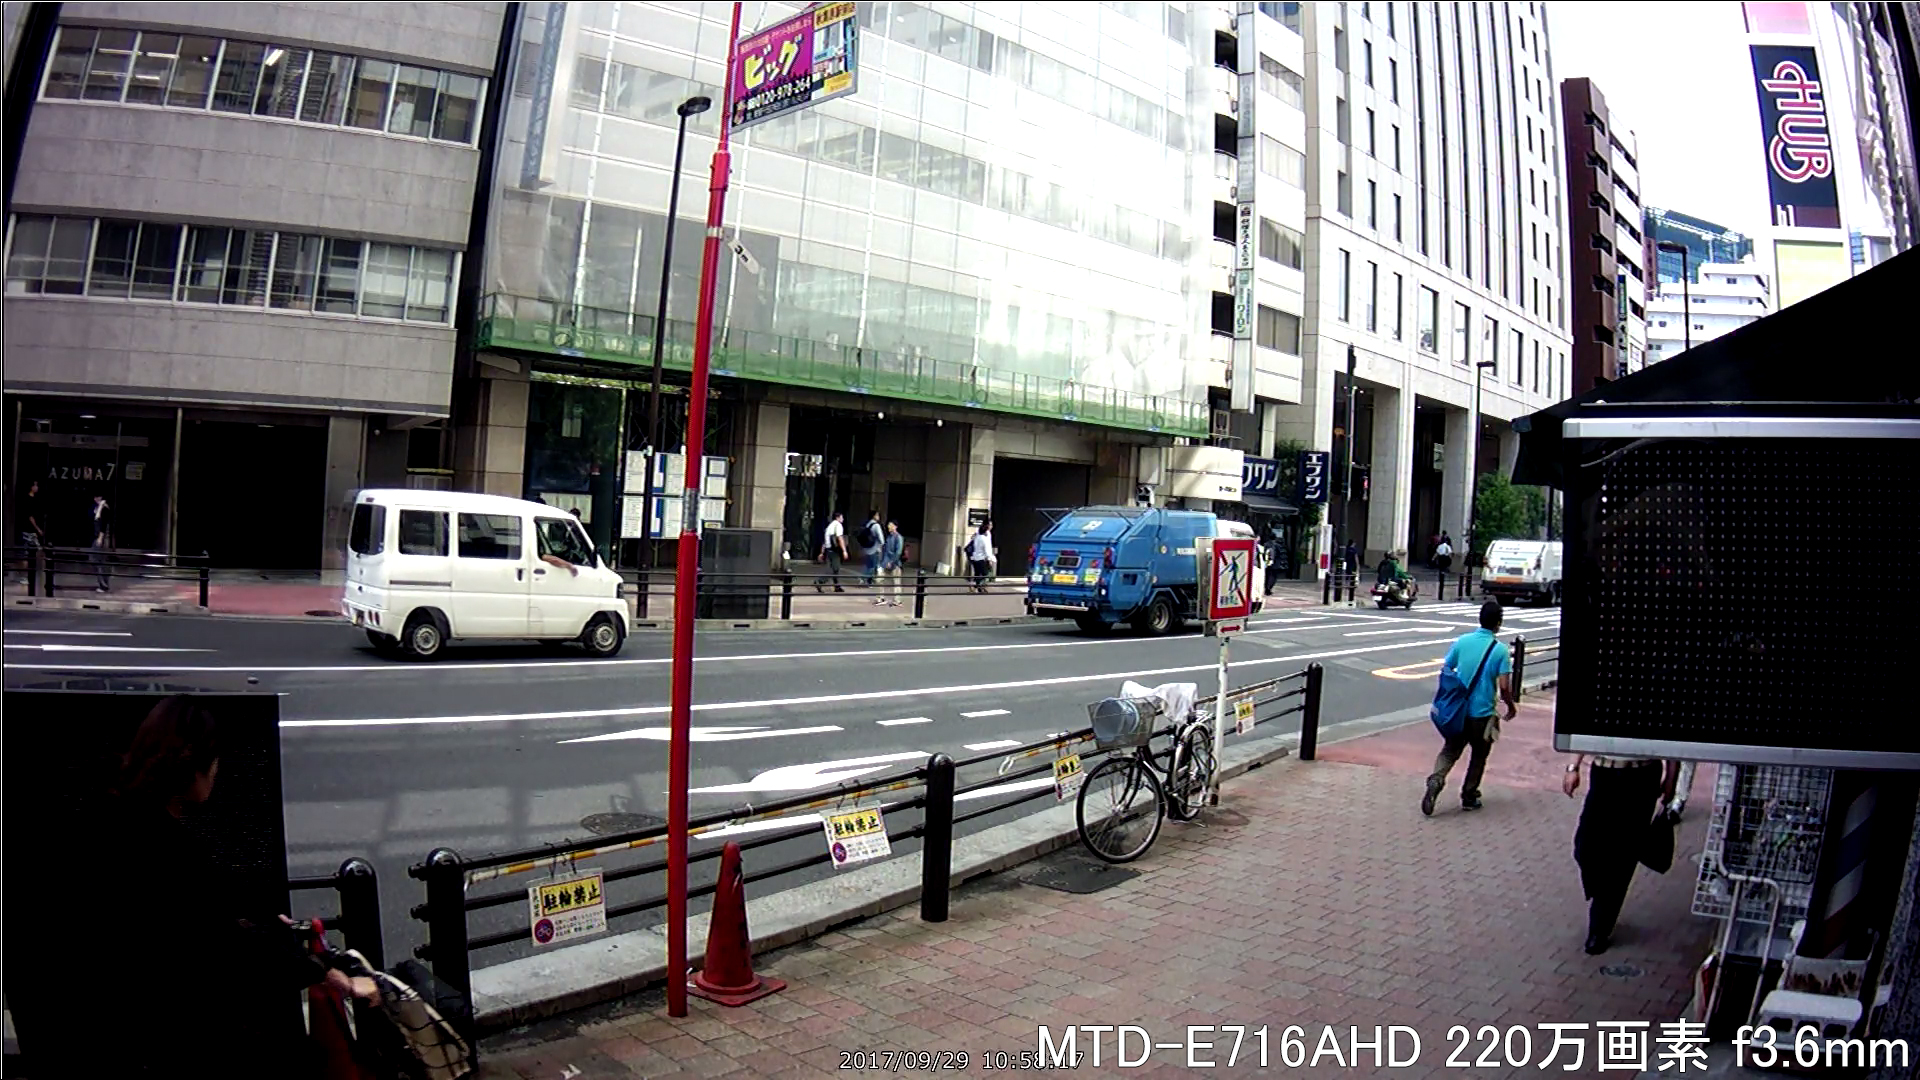 MTD-E716AHD 事務所外を撮影(屋外)